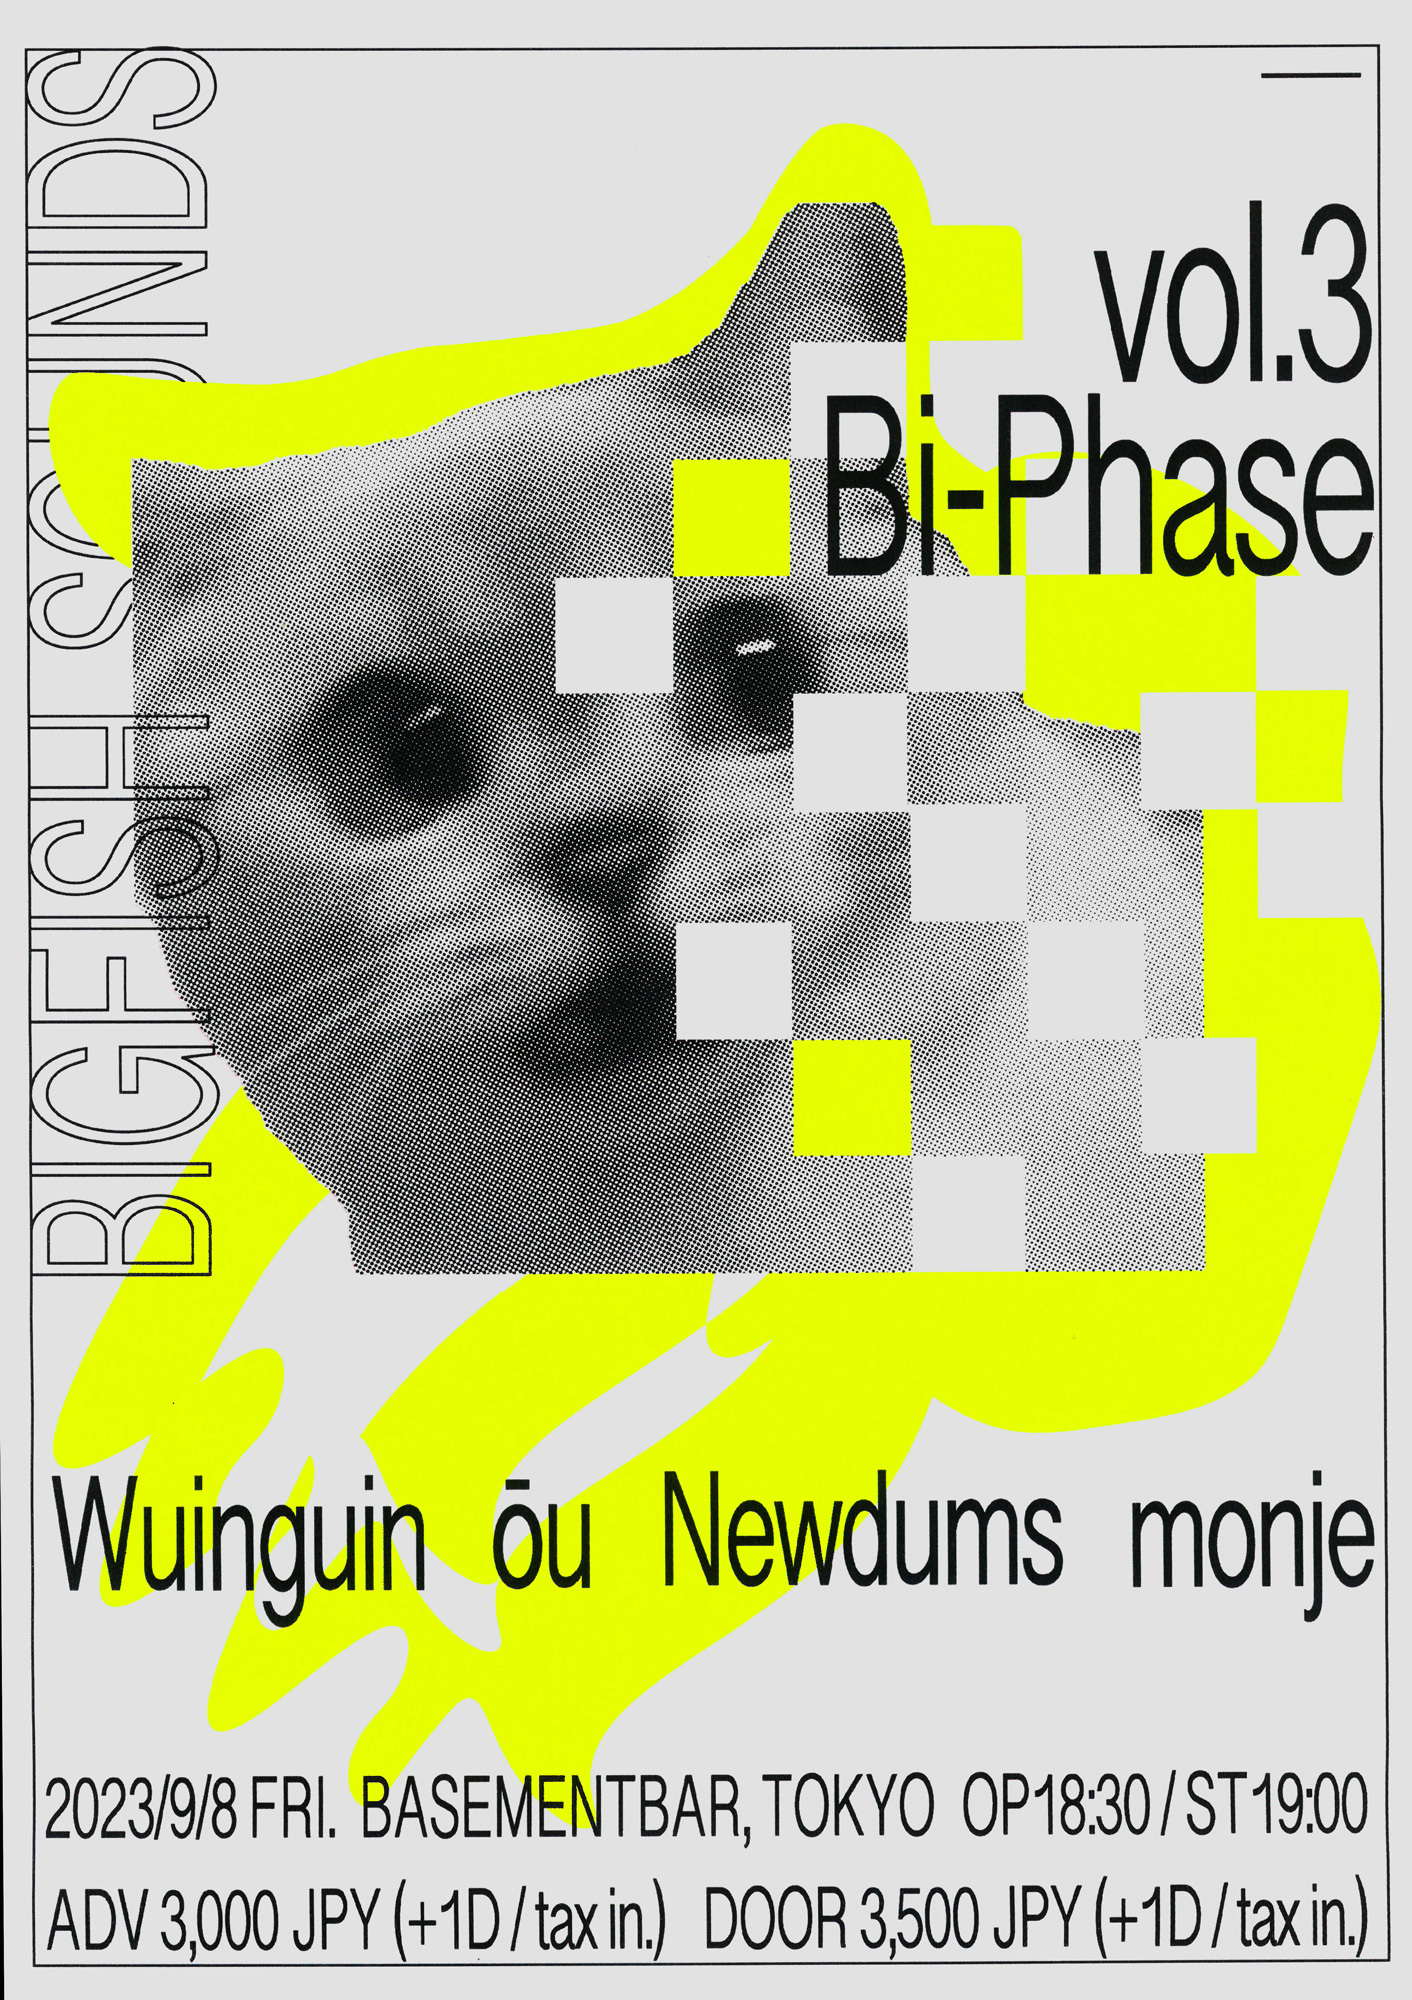 『Bigfish Sounds presents Bi-Phase vol.3』